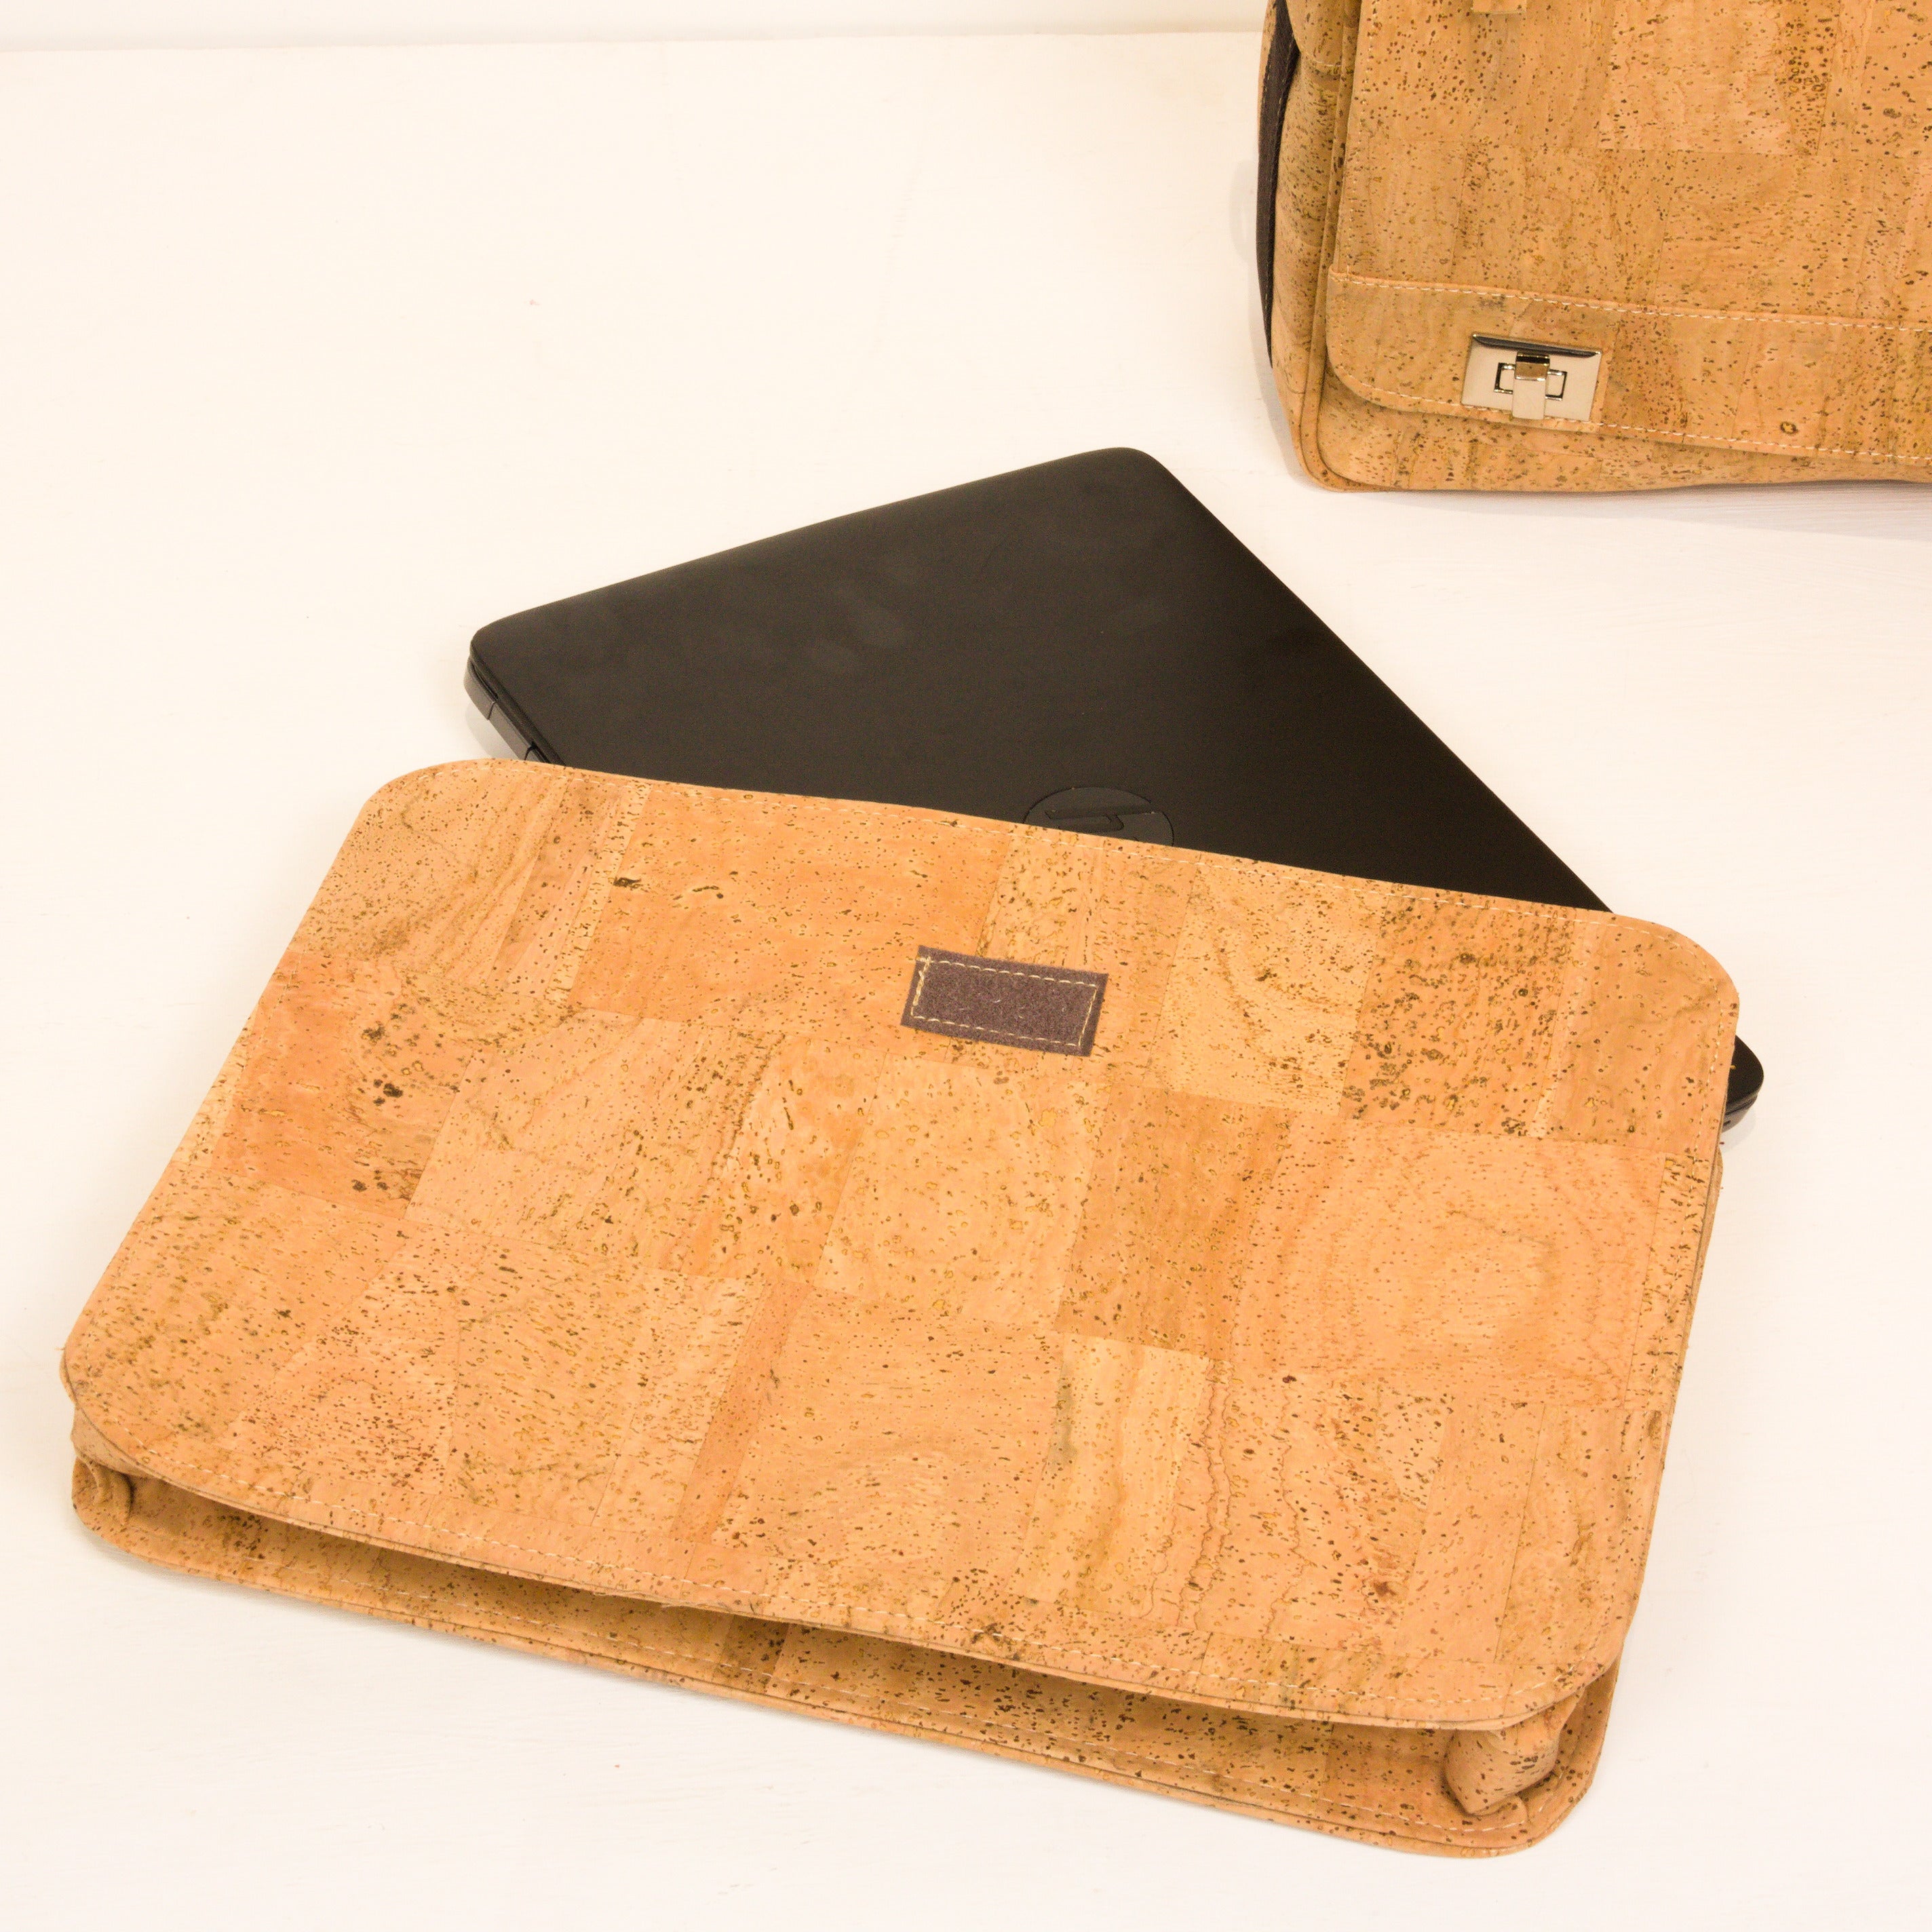 Cork briefcase * vegan * laptop bag for men * washable * antiseptic * handmade in Portugal